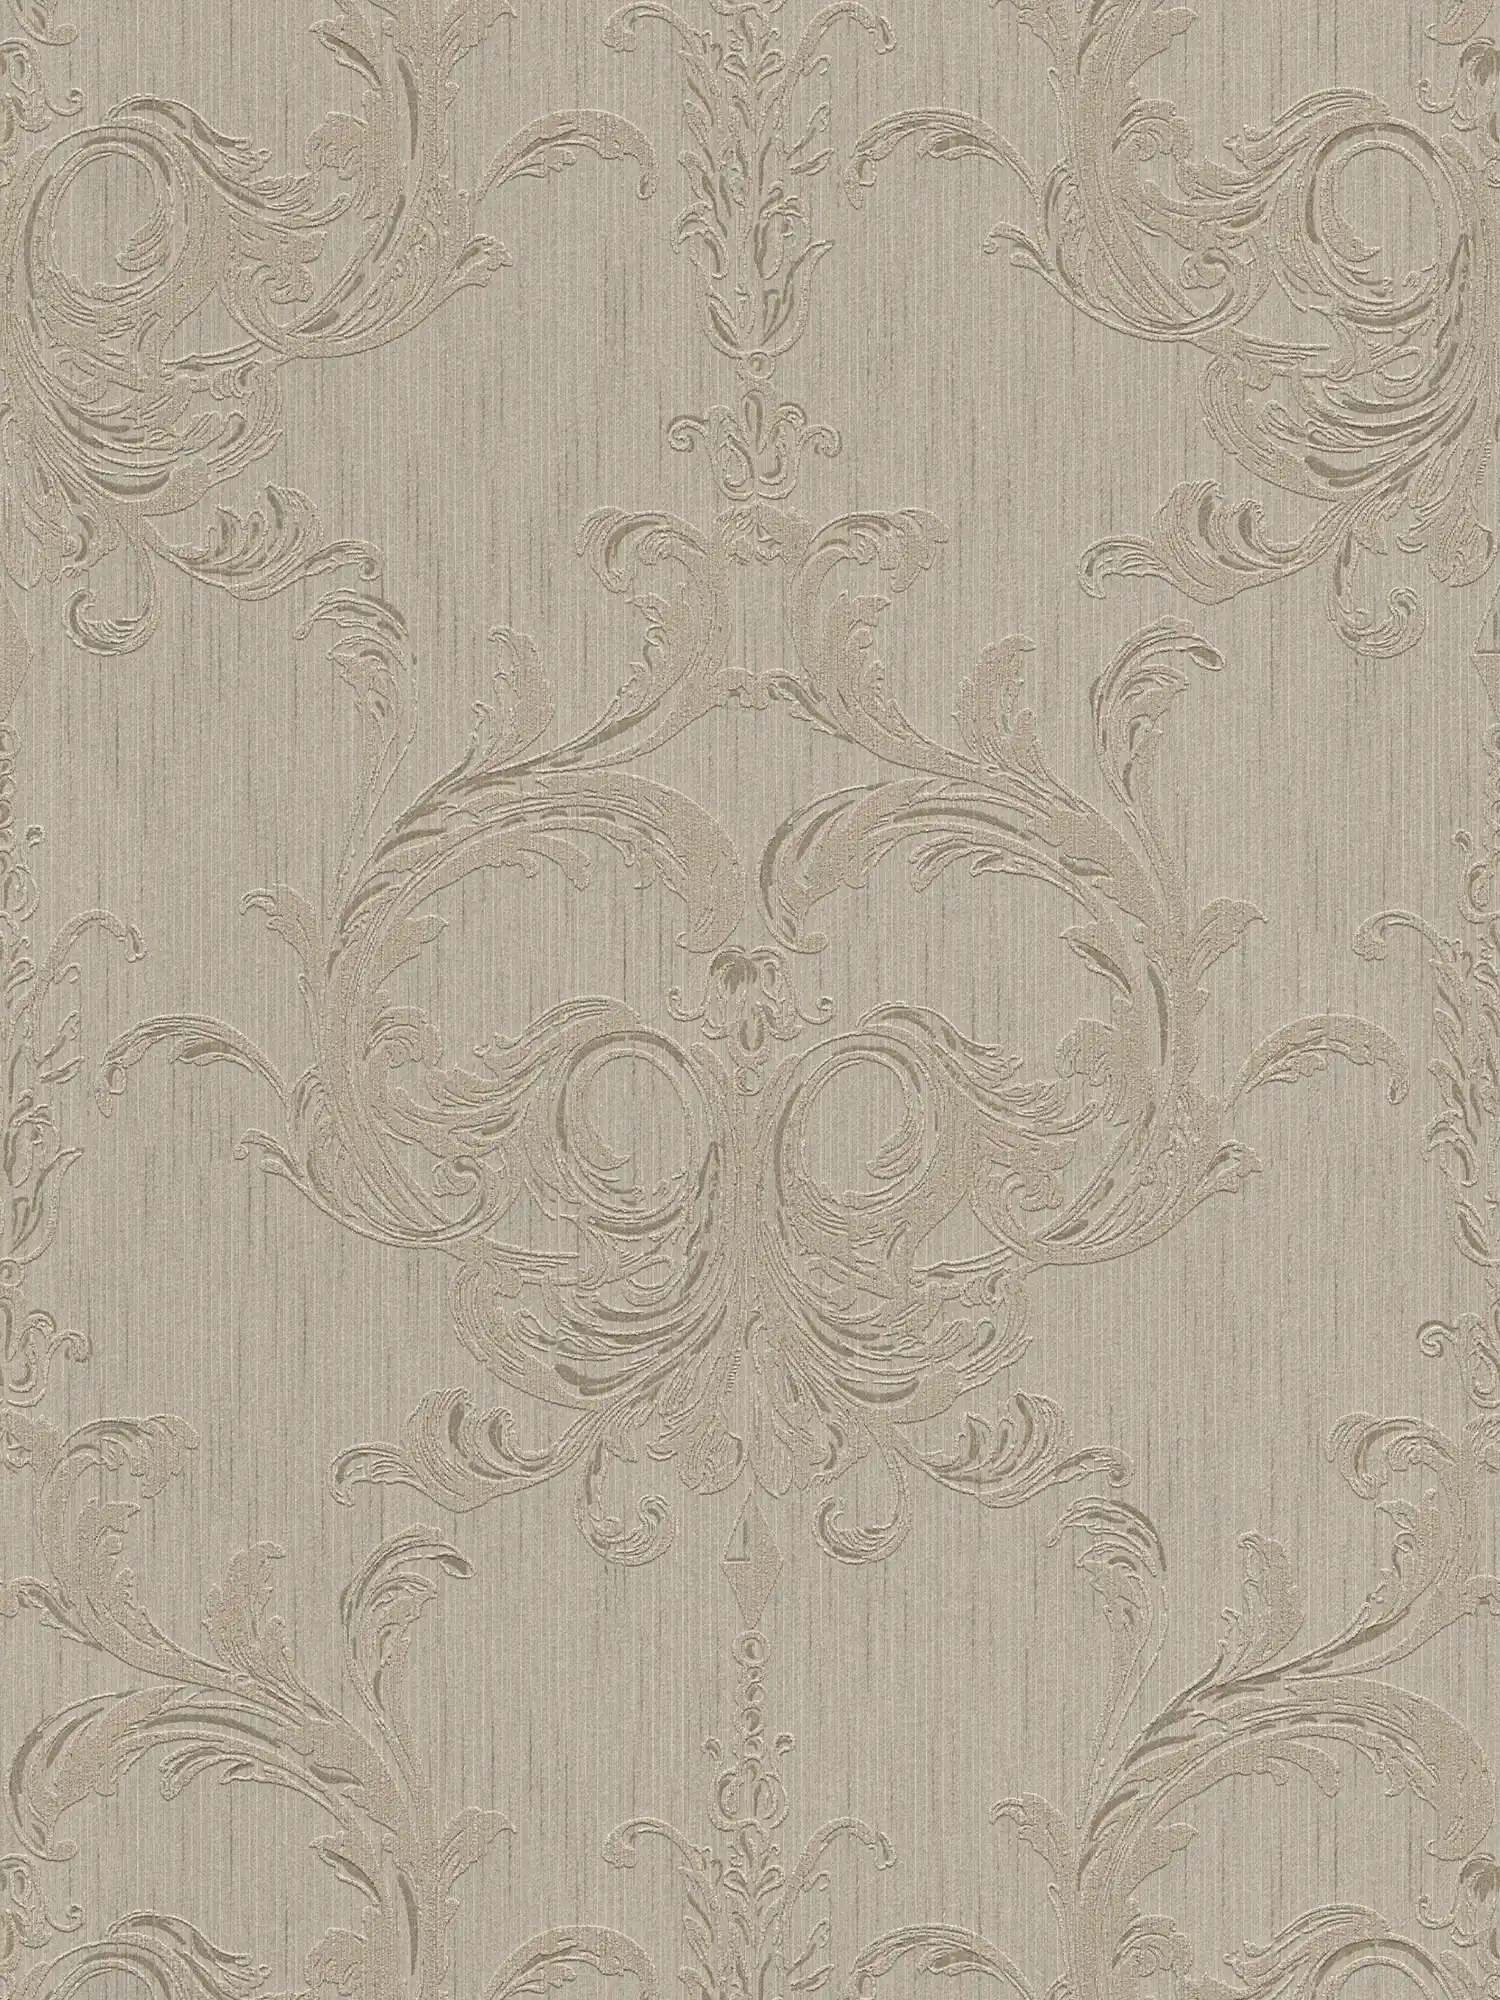 Elegant wallpaper with filigree ornament design - brown
